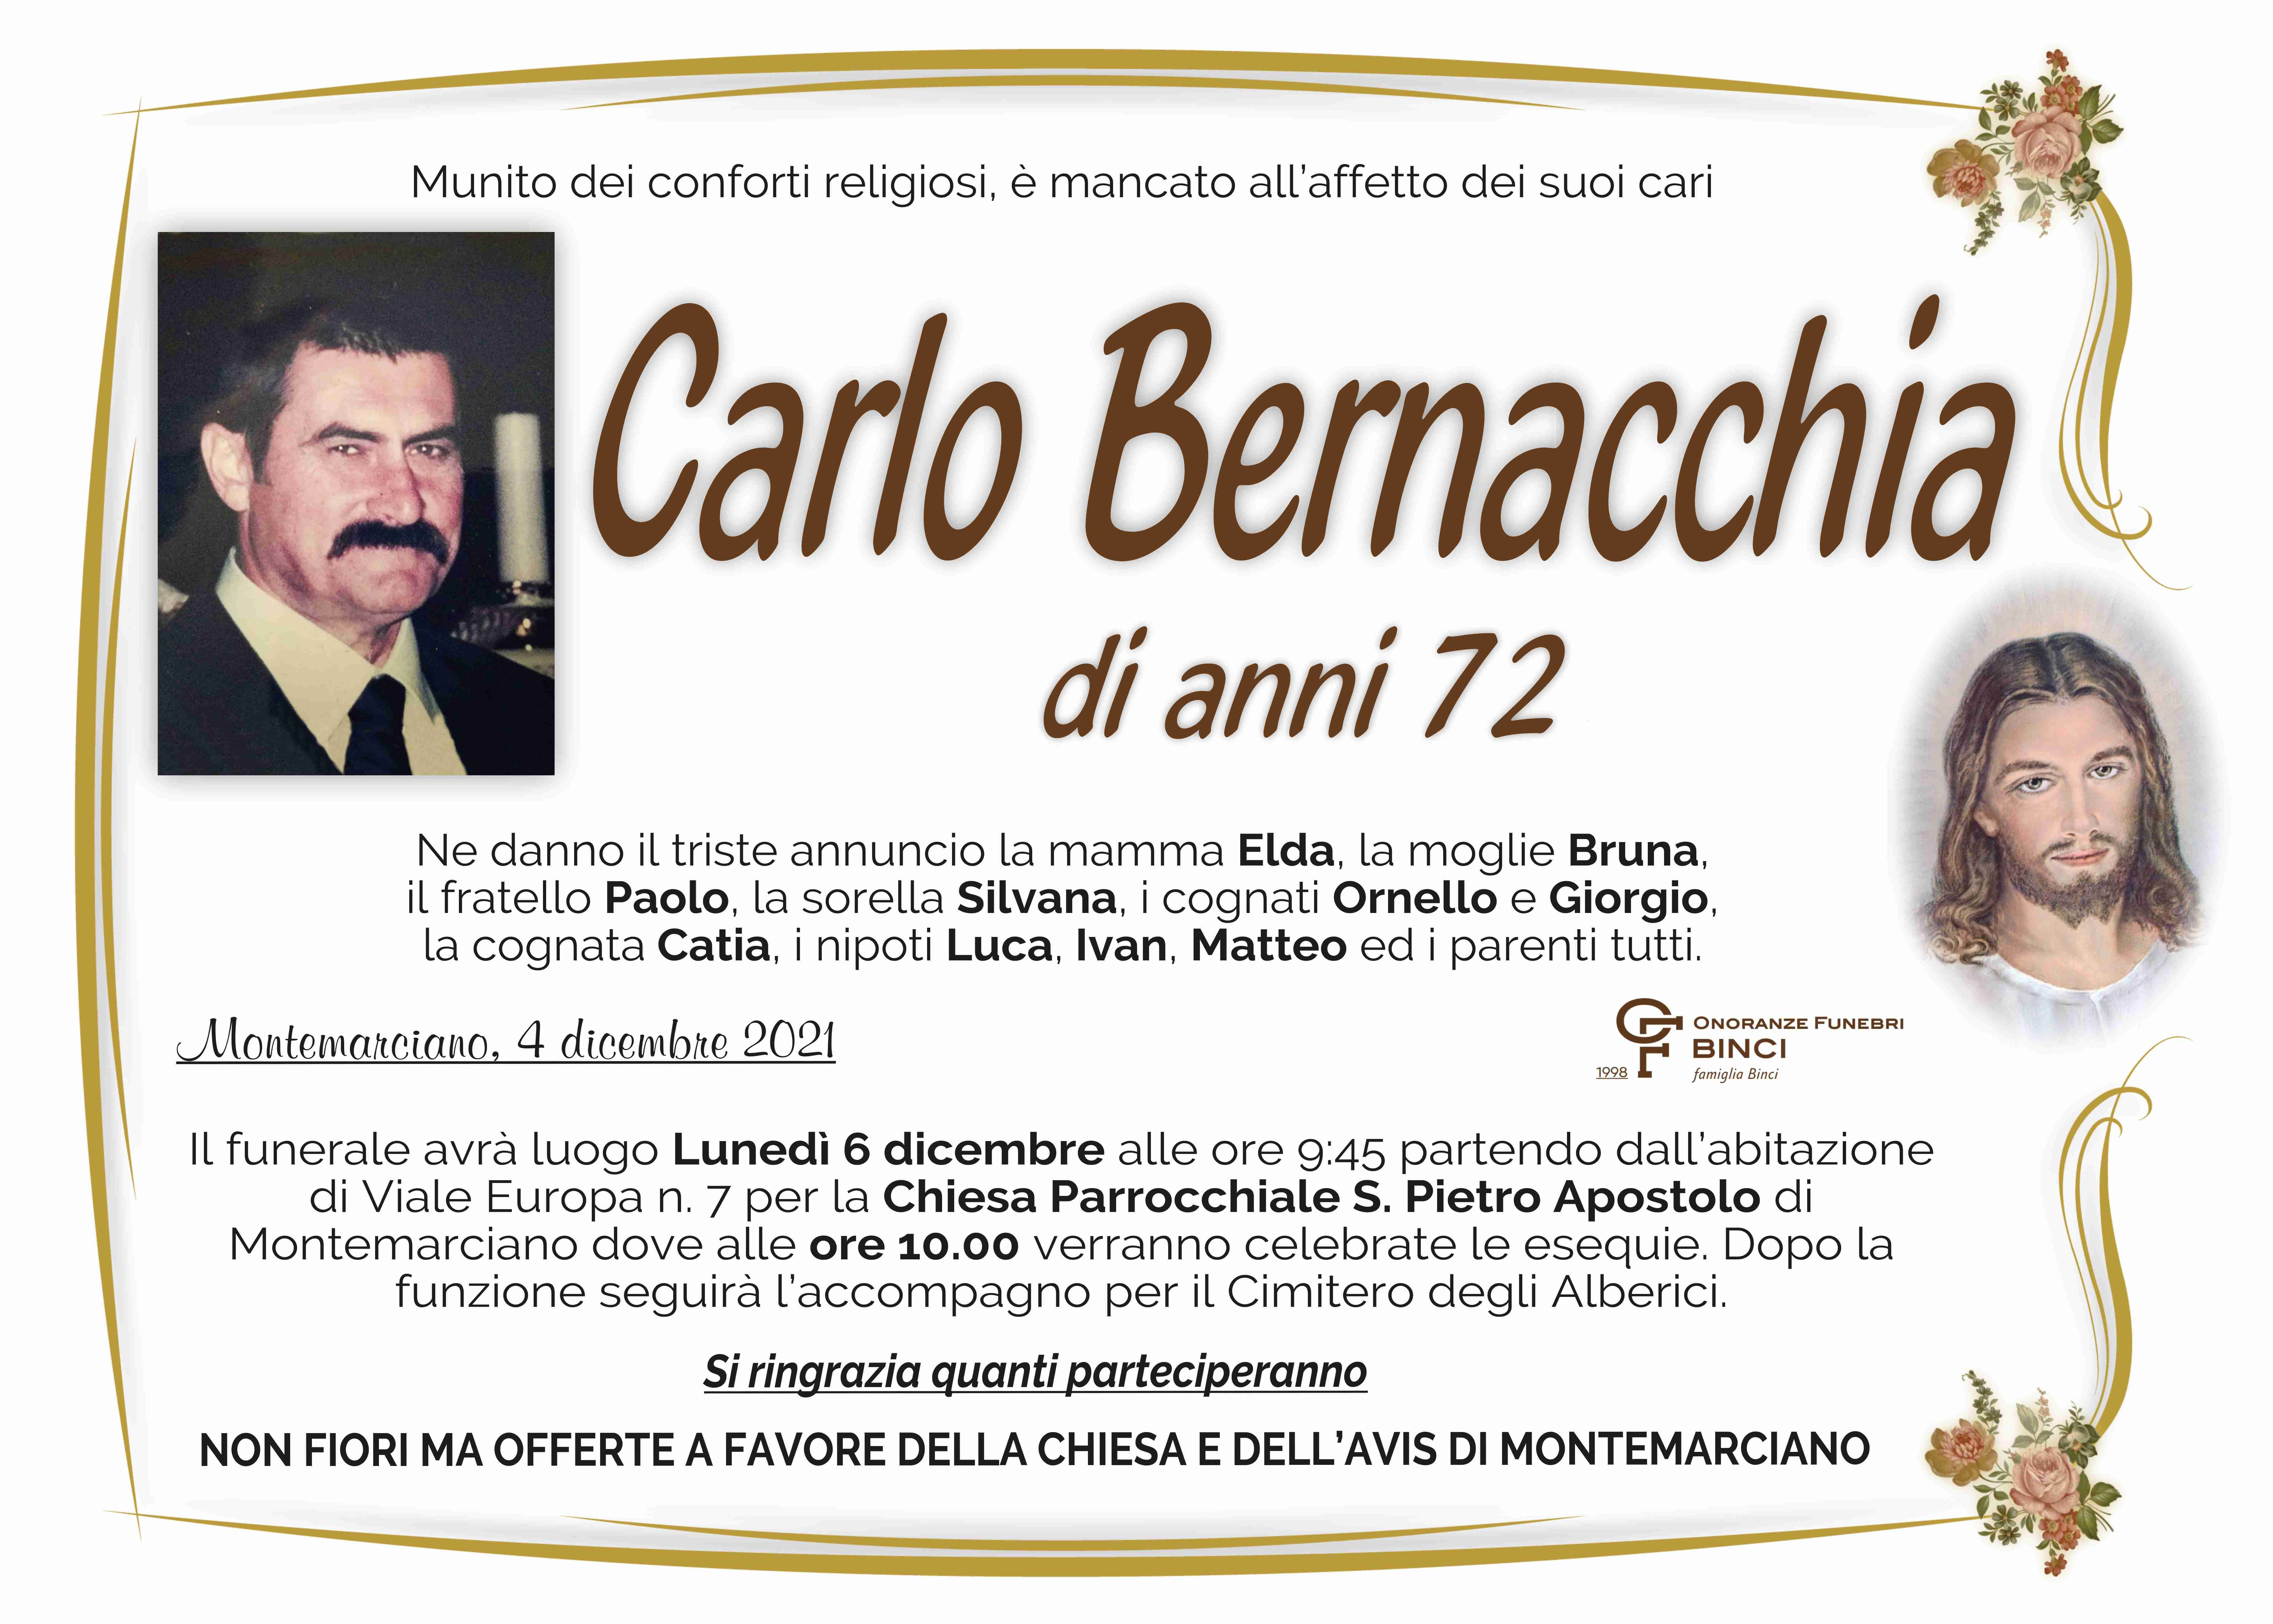 Carlo Bernacchia